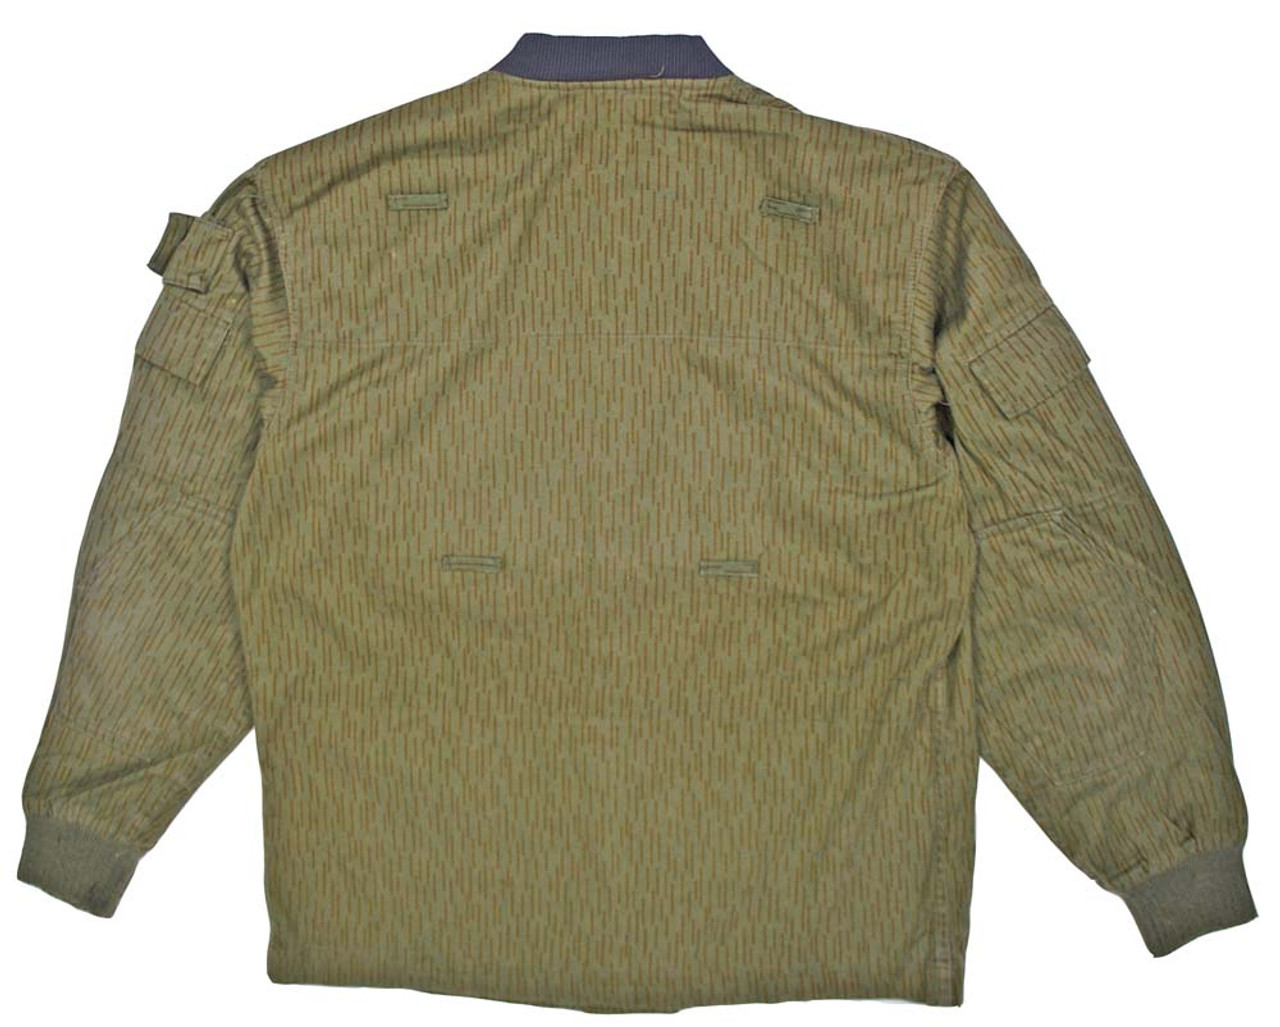 NVA 'Last Pattern' Paratrooper Camo Jacket W/ Knitted Collar & Cuffs ...